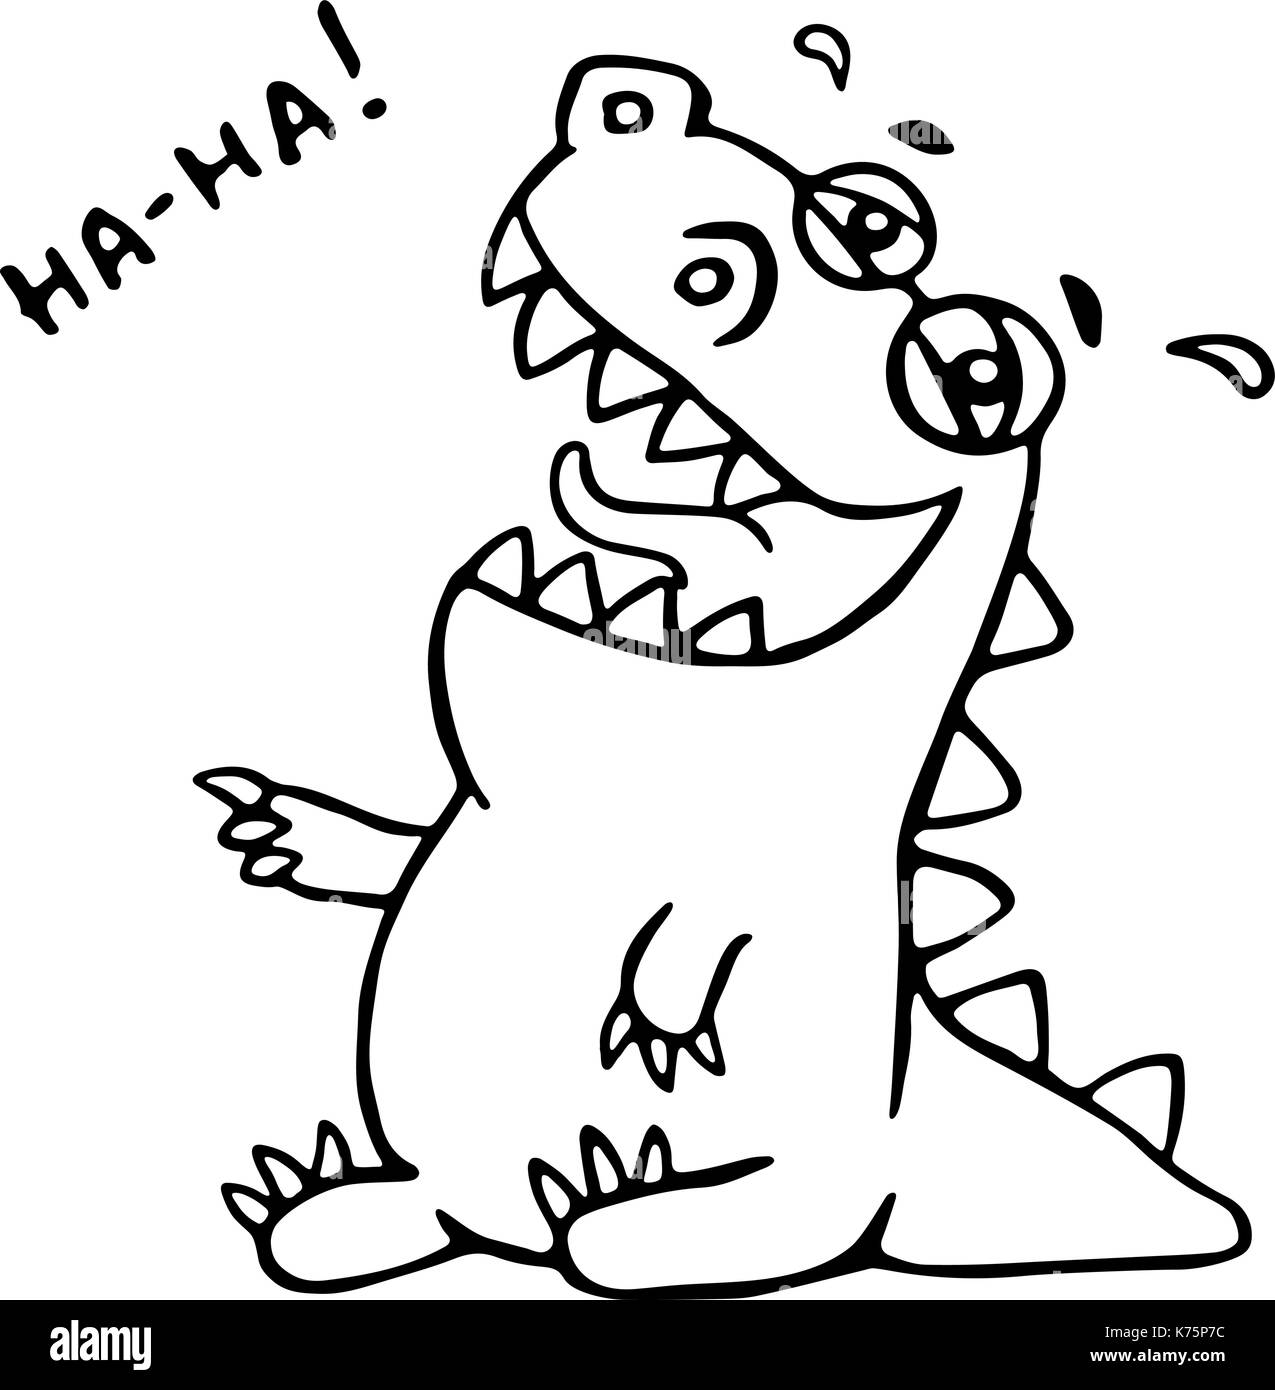 Laughing dinosaur. Vector illustration. Good mood. Funny cute imaginary character. Stock Vector